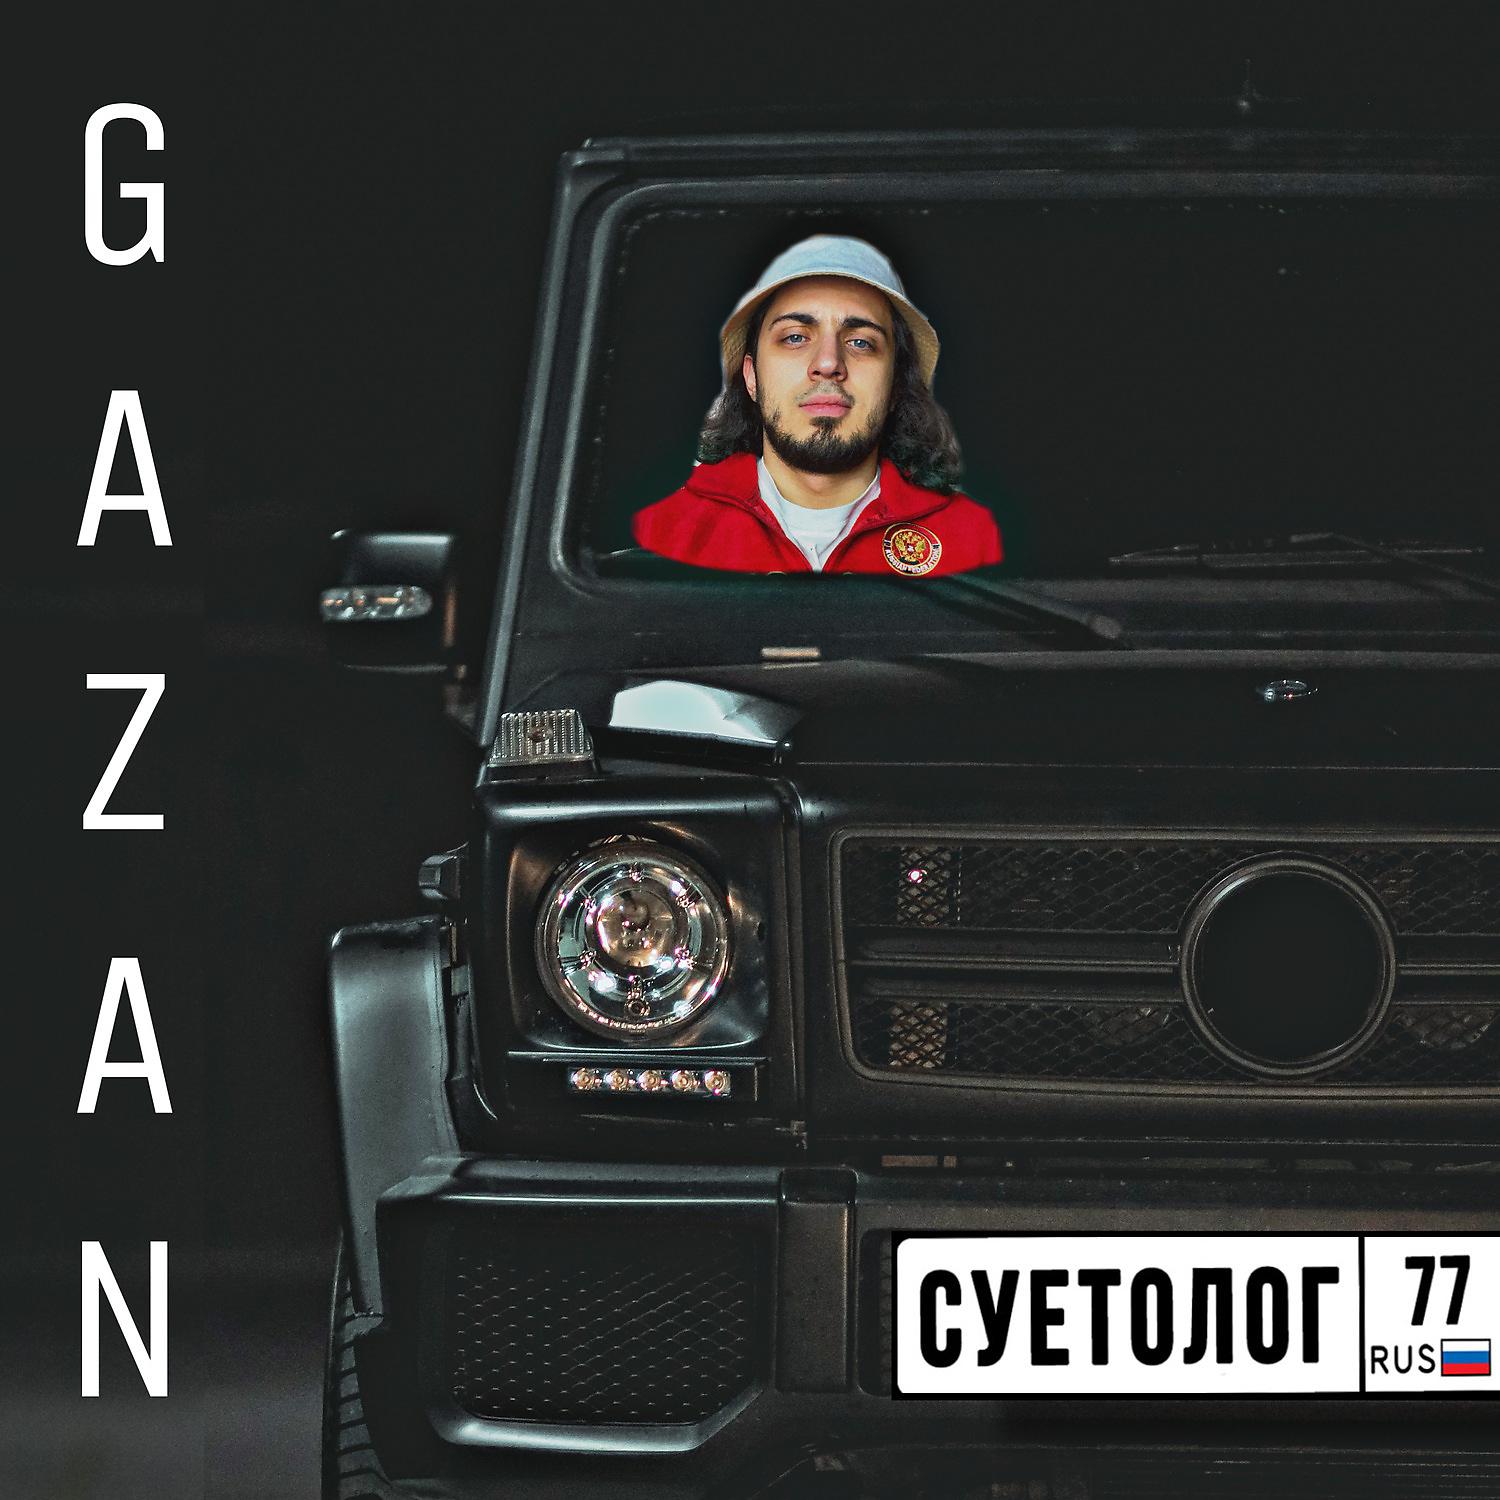 Суетолог песня. Gazan суетолог. Газан певец суетолог. Gazan - Абу бандит альбом. Gazan 2021.